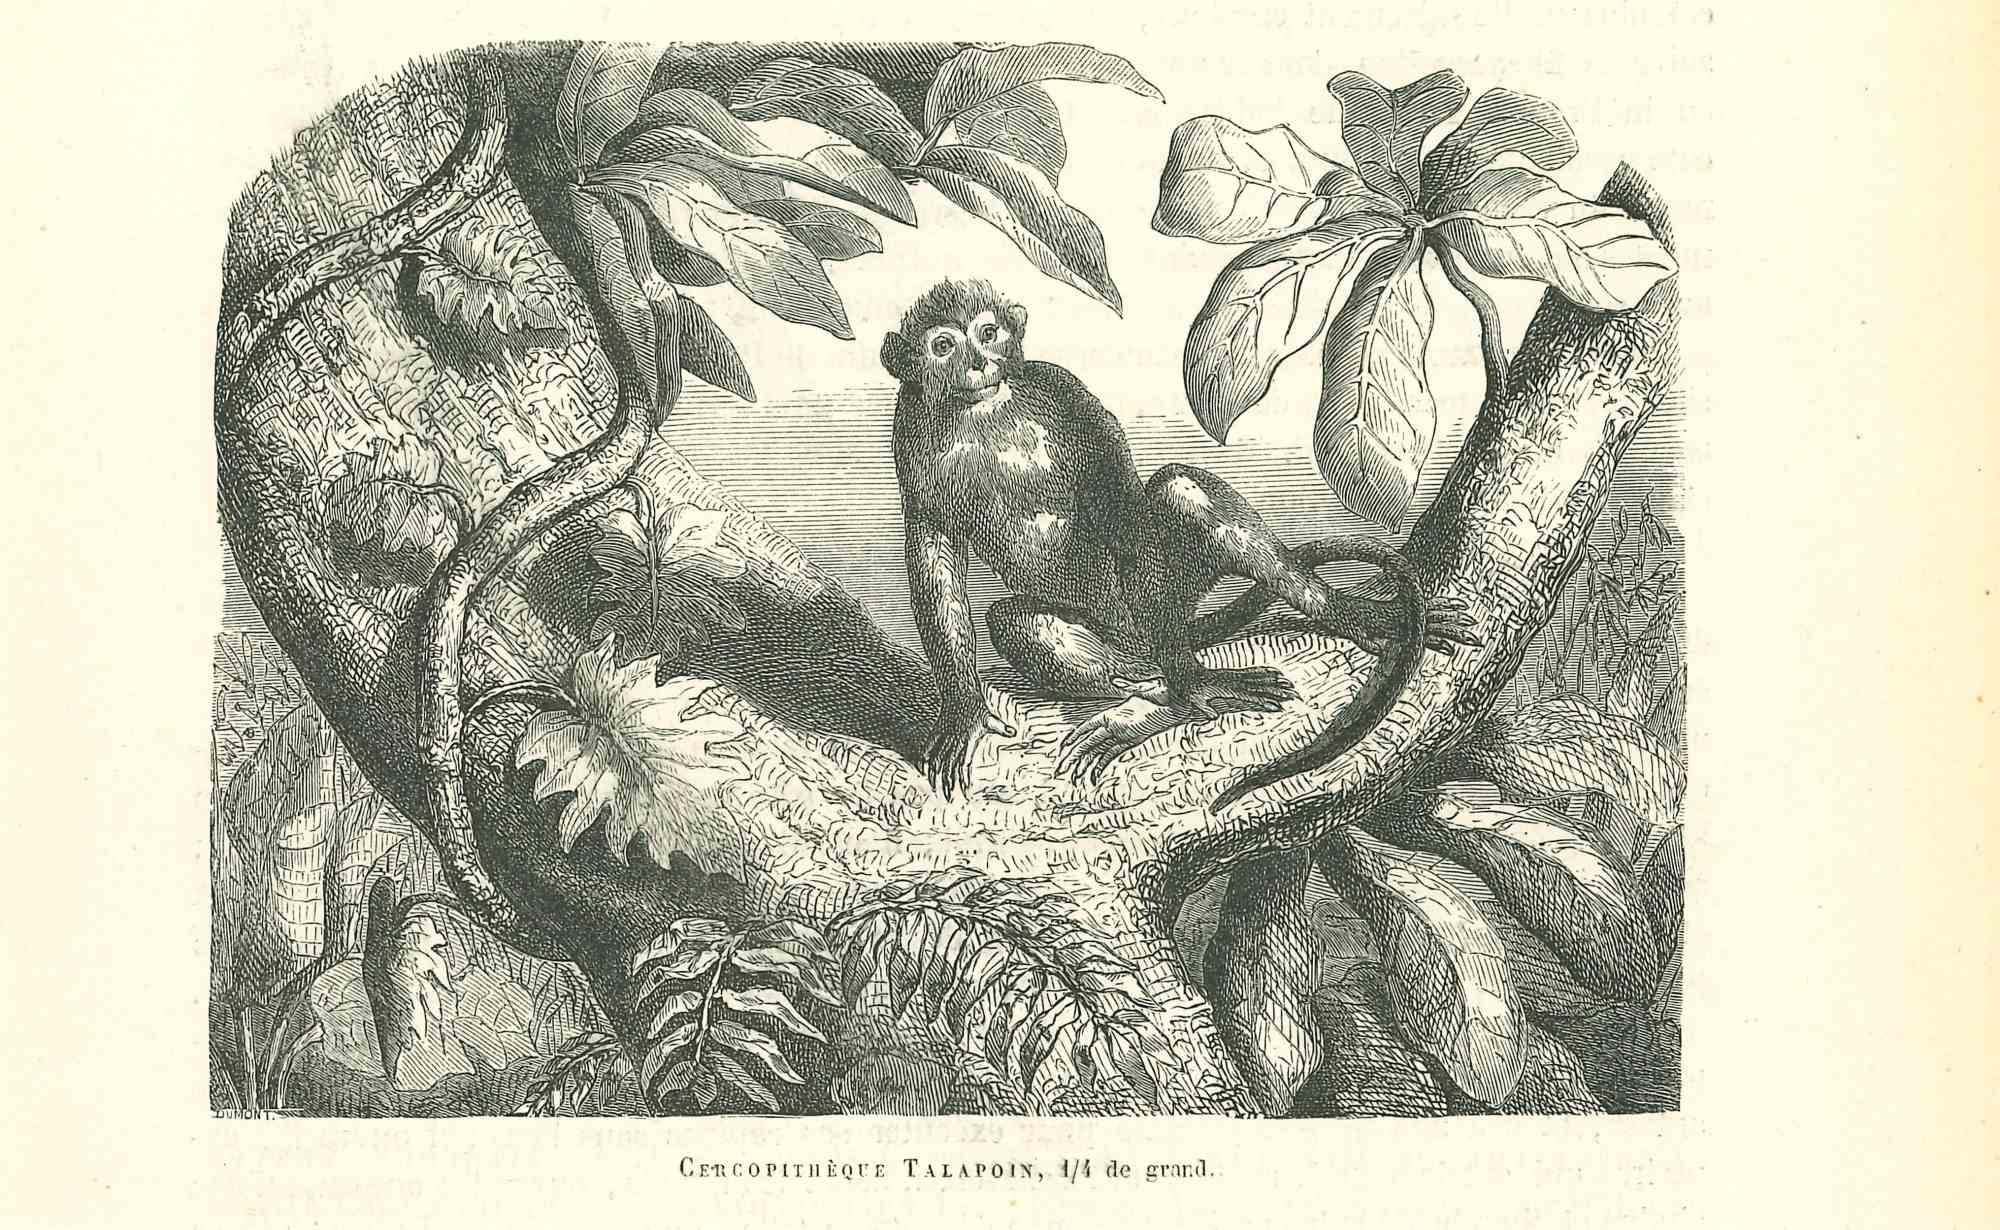 Paul Gervais  Animal Print – The Monkey – Lithographie von Paul Gervais, 1854